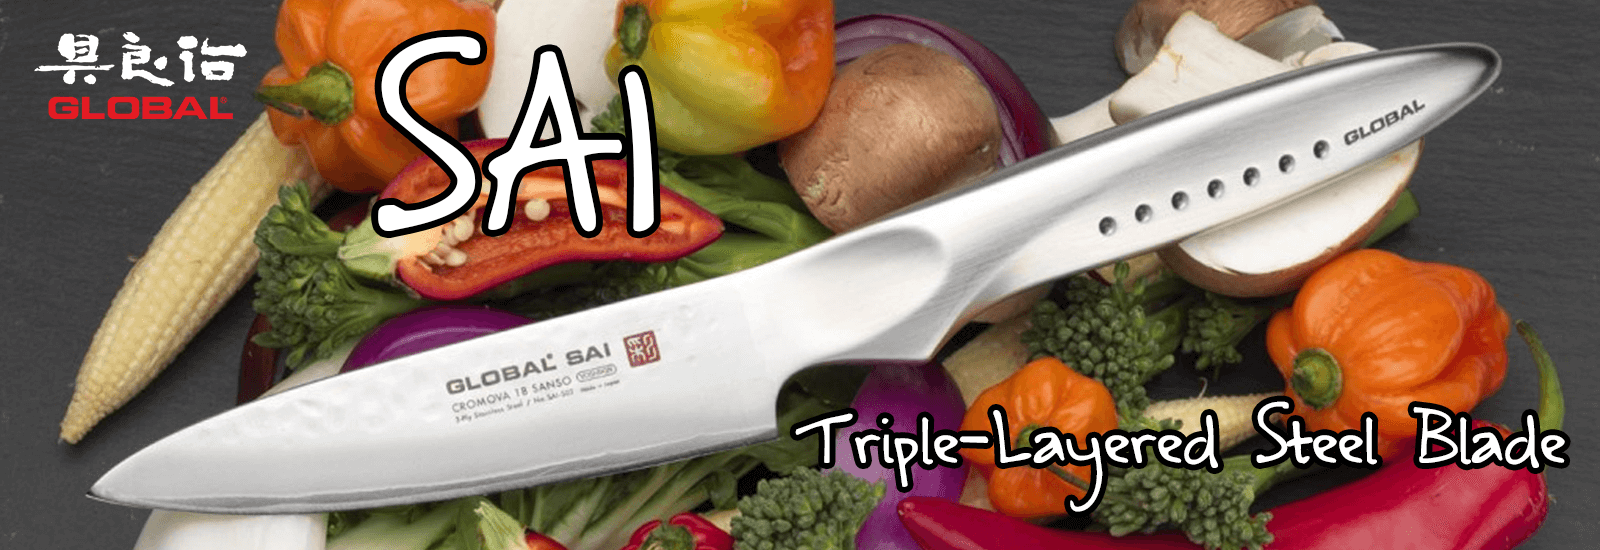 Global Knives SAI Series